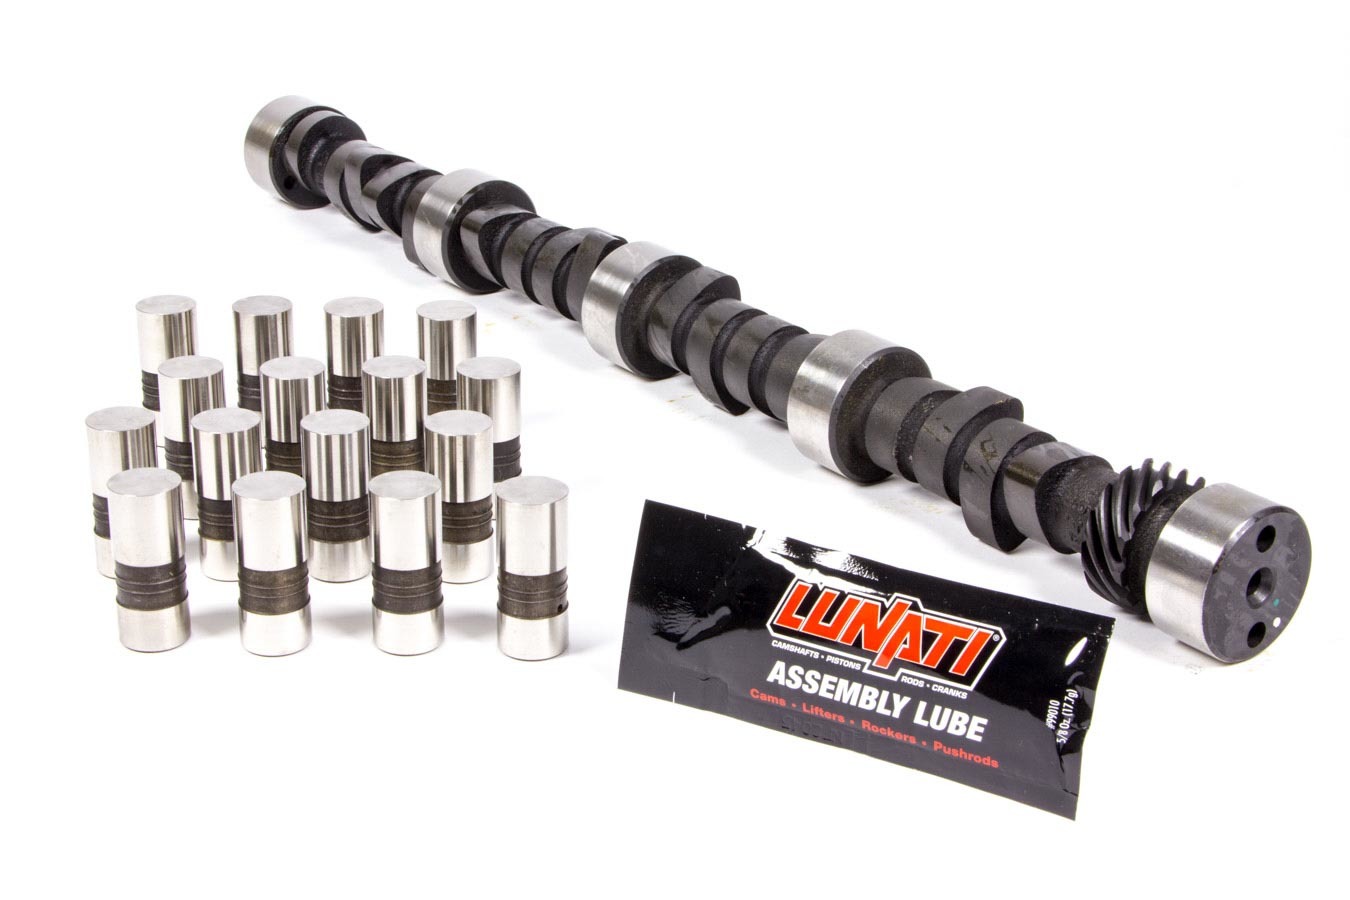 Lunati Cams 10110701LK Camshaft / Lifters, Voodoo, Hydraulic Flat Tappet, Lift 0.515 / 0.530 in, Duration 256 / 262, 112 LSA, 1000 / 5000 RPM, Big Block Chevy, Kit